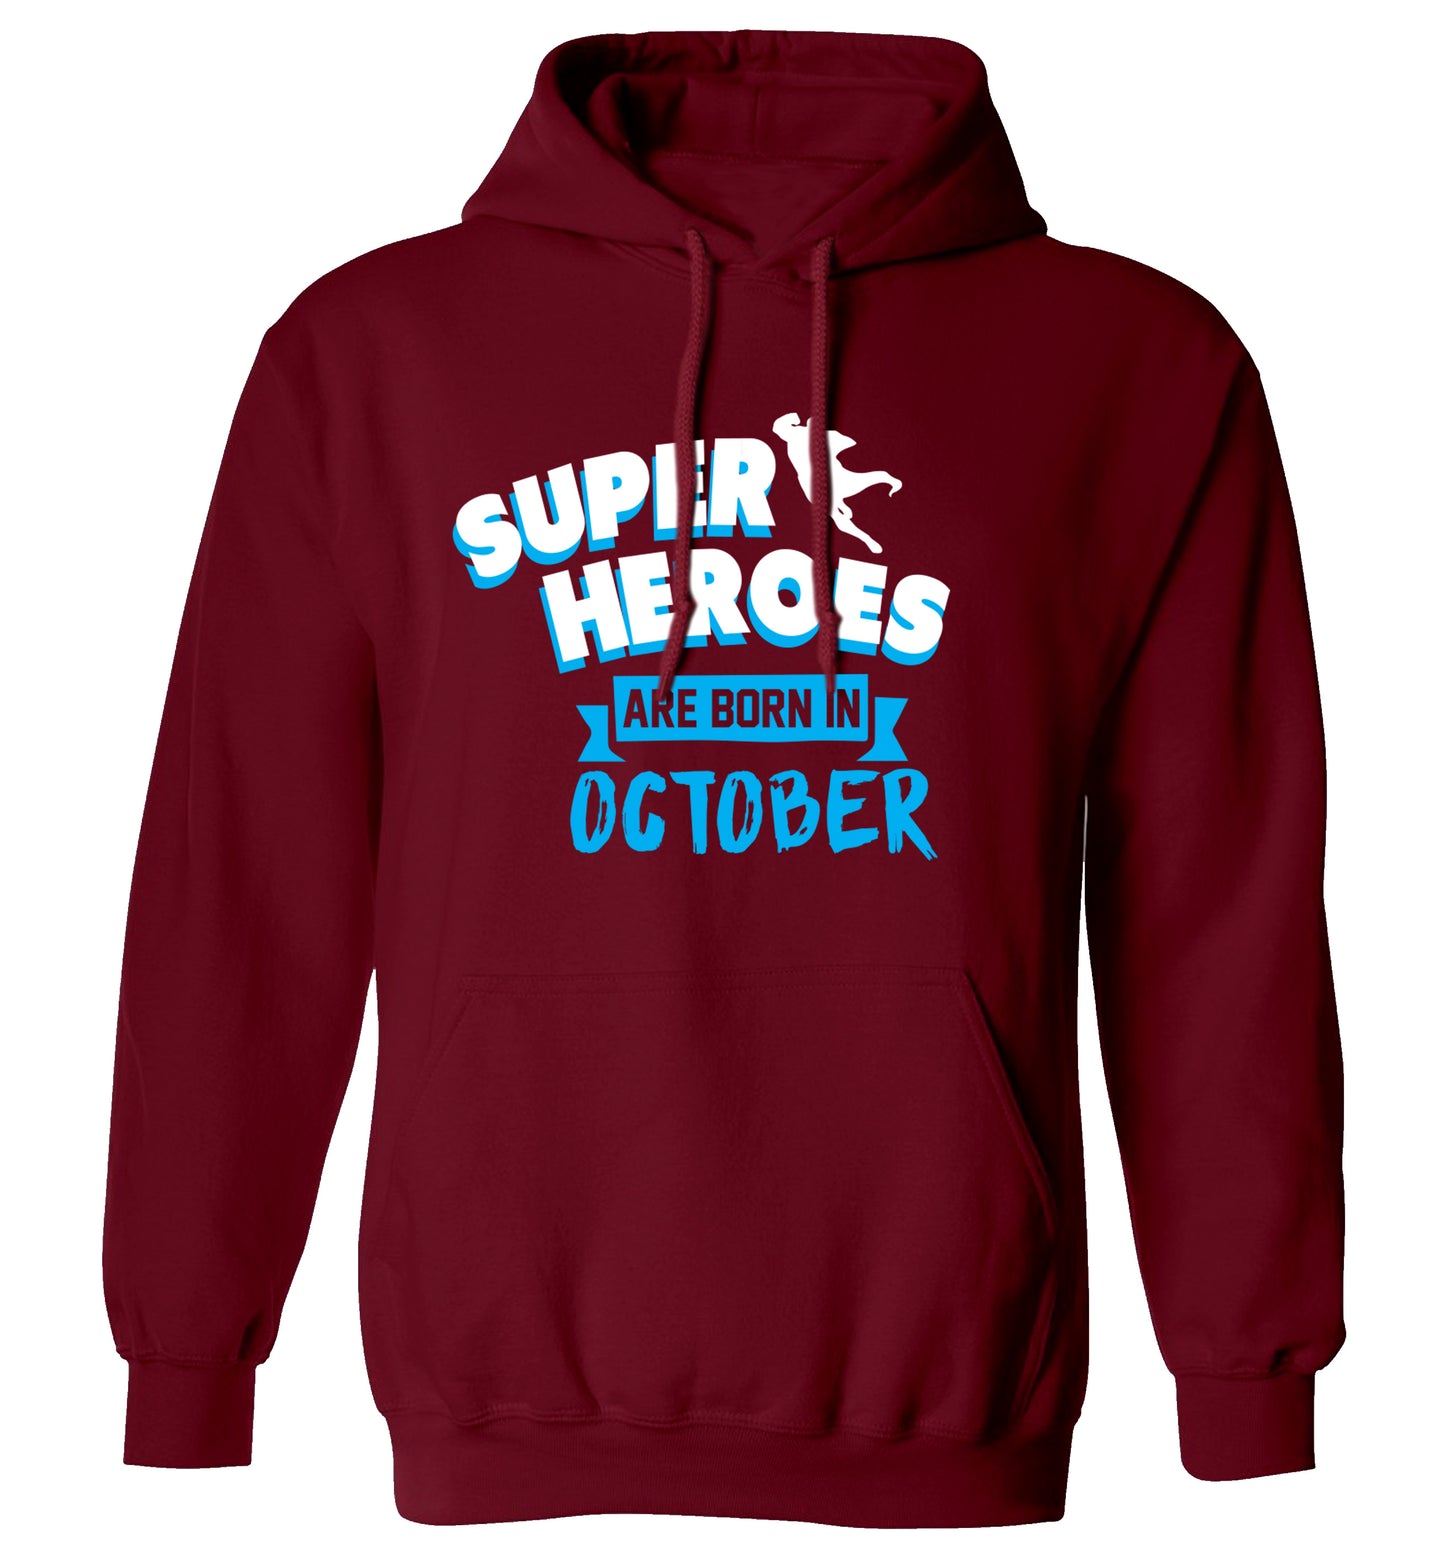 Superheroes are born in October adults unisex maroon hoodie 2XL